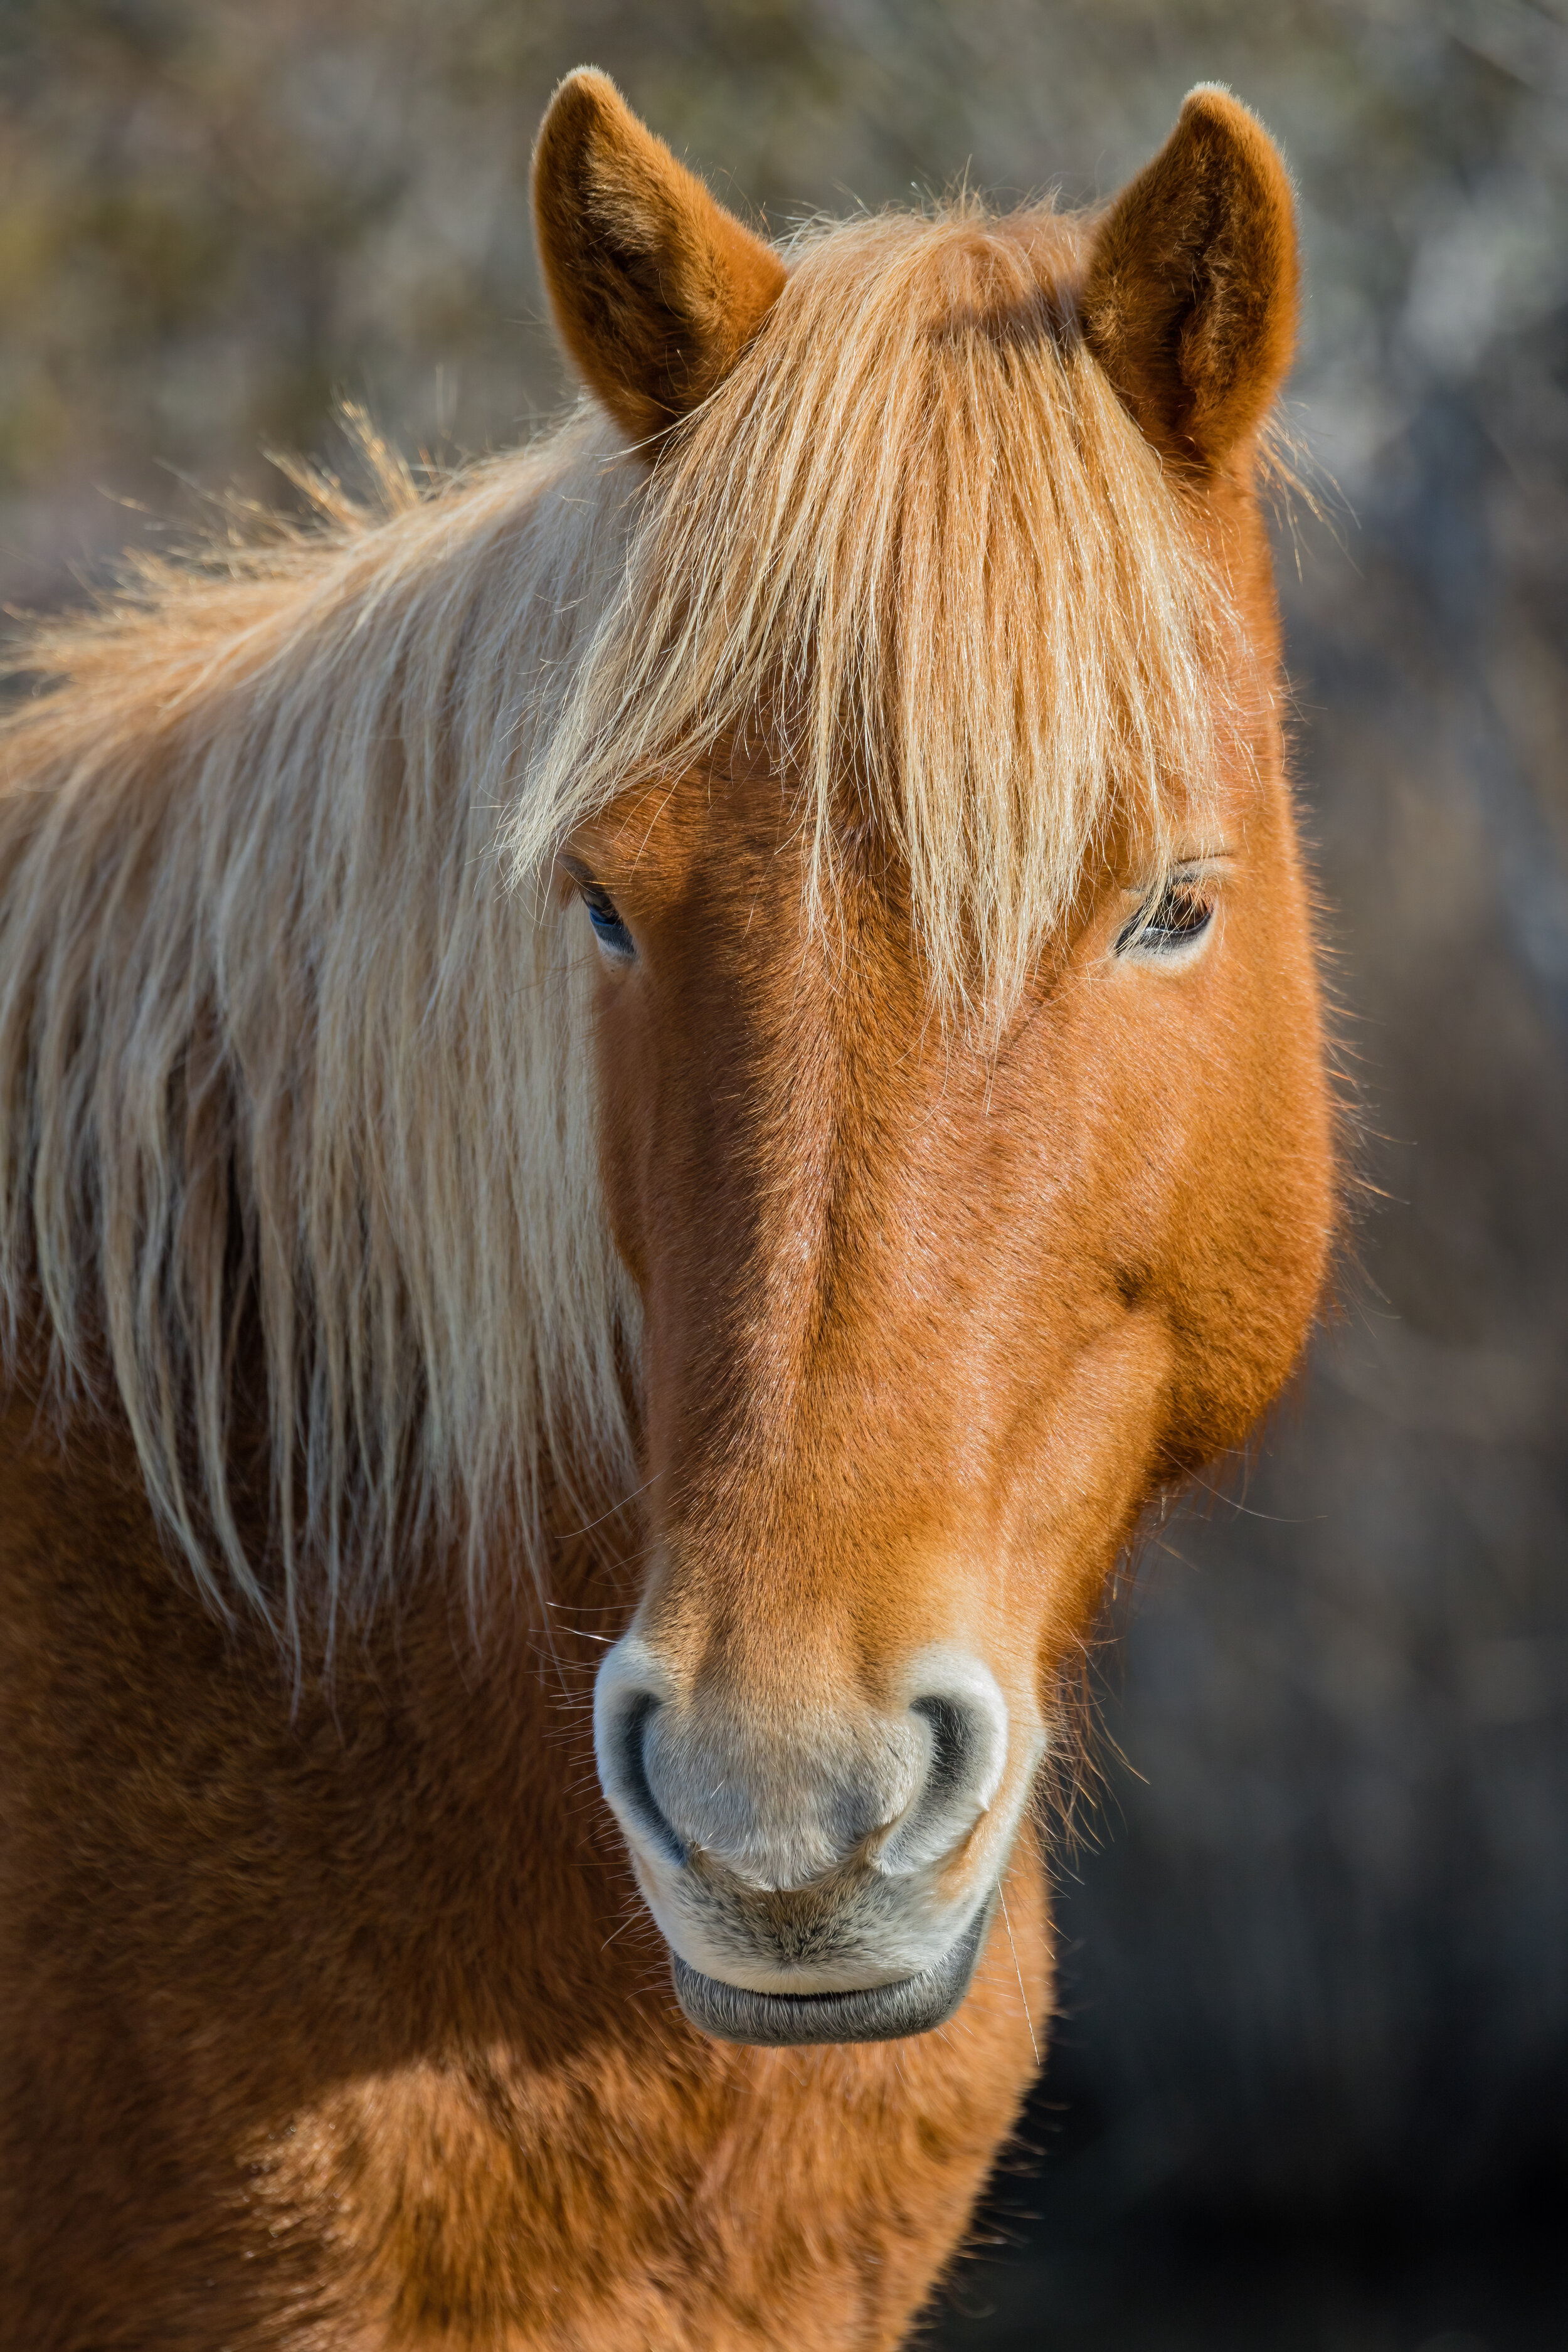 Pony Pony. Assateague, Md. (Mar. 2021)